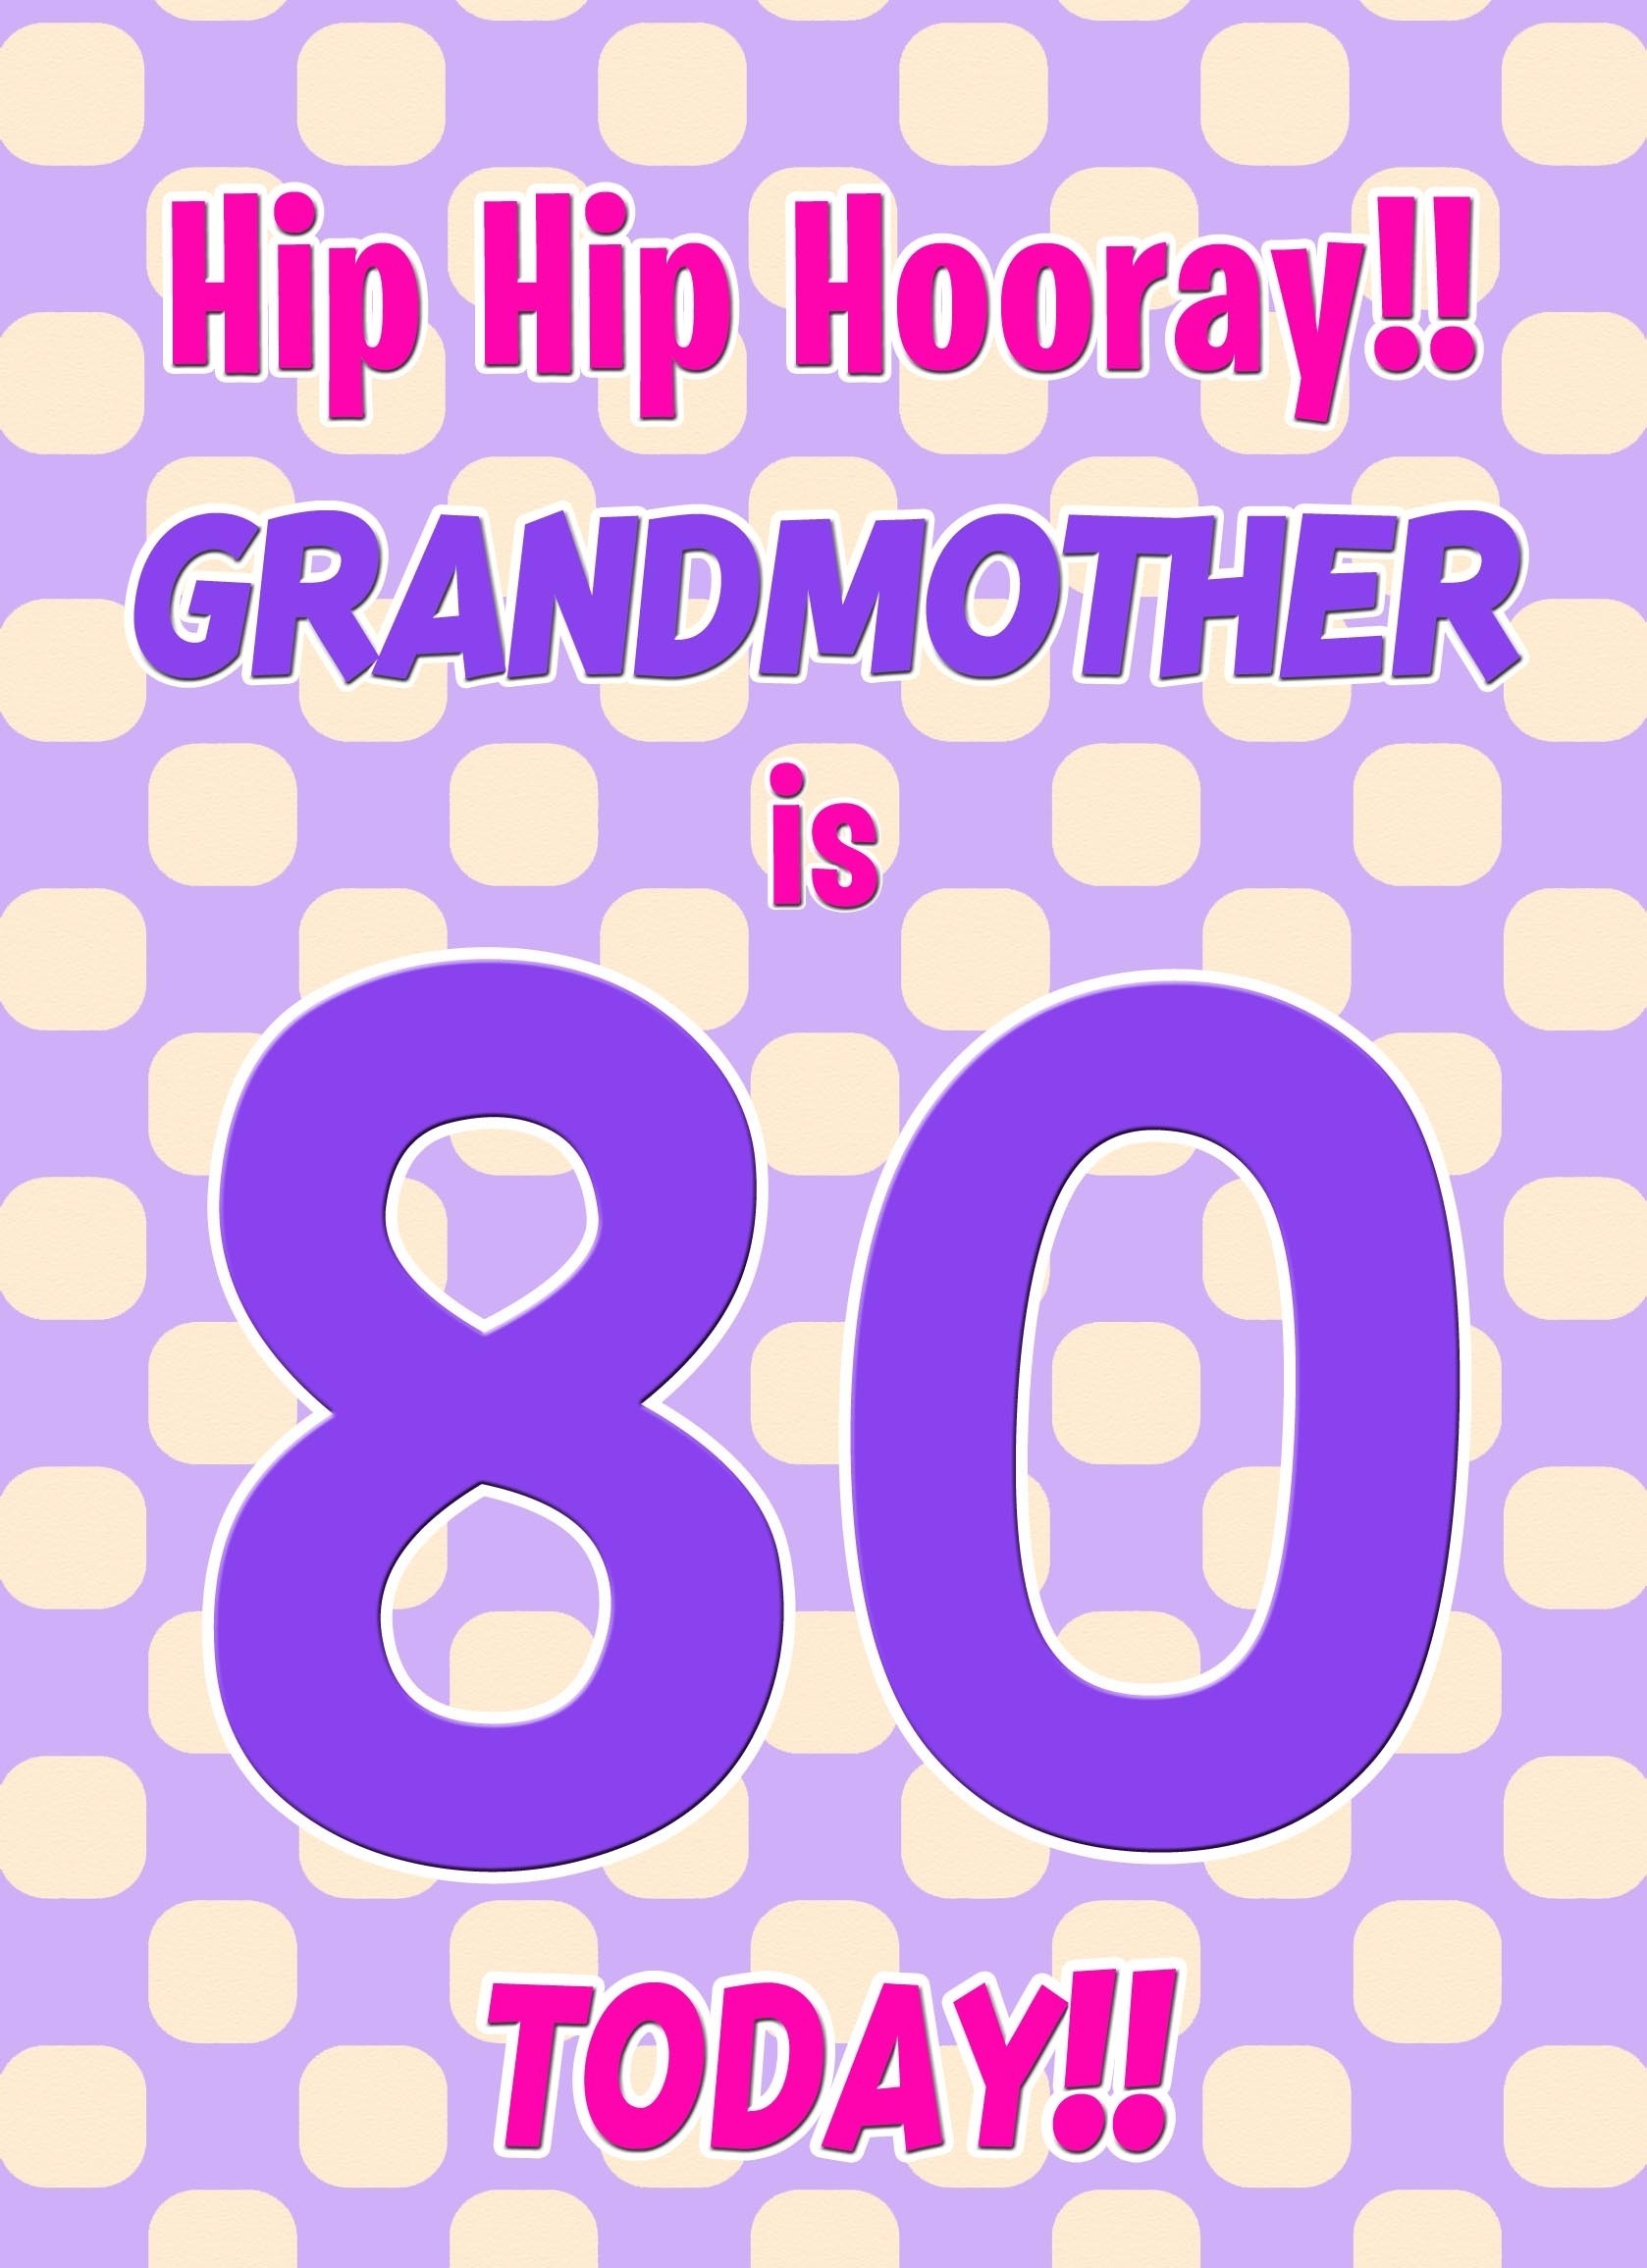 Grandmother 80th Birthday Card (Purple Spots)